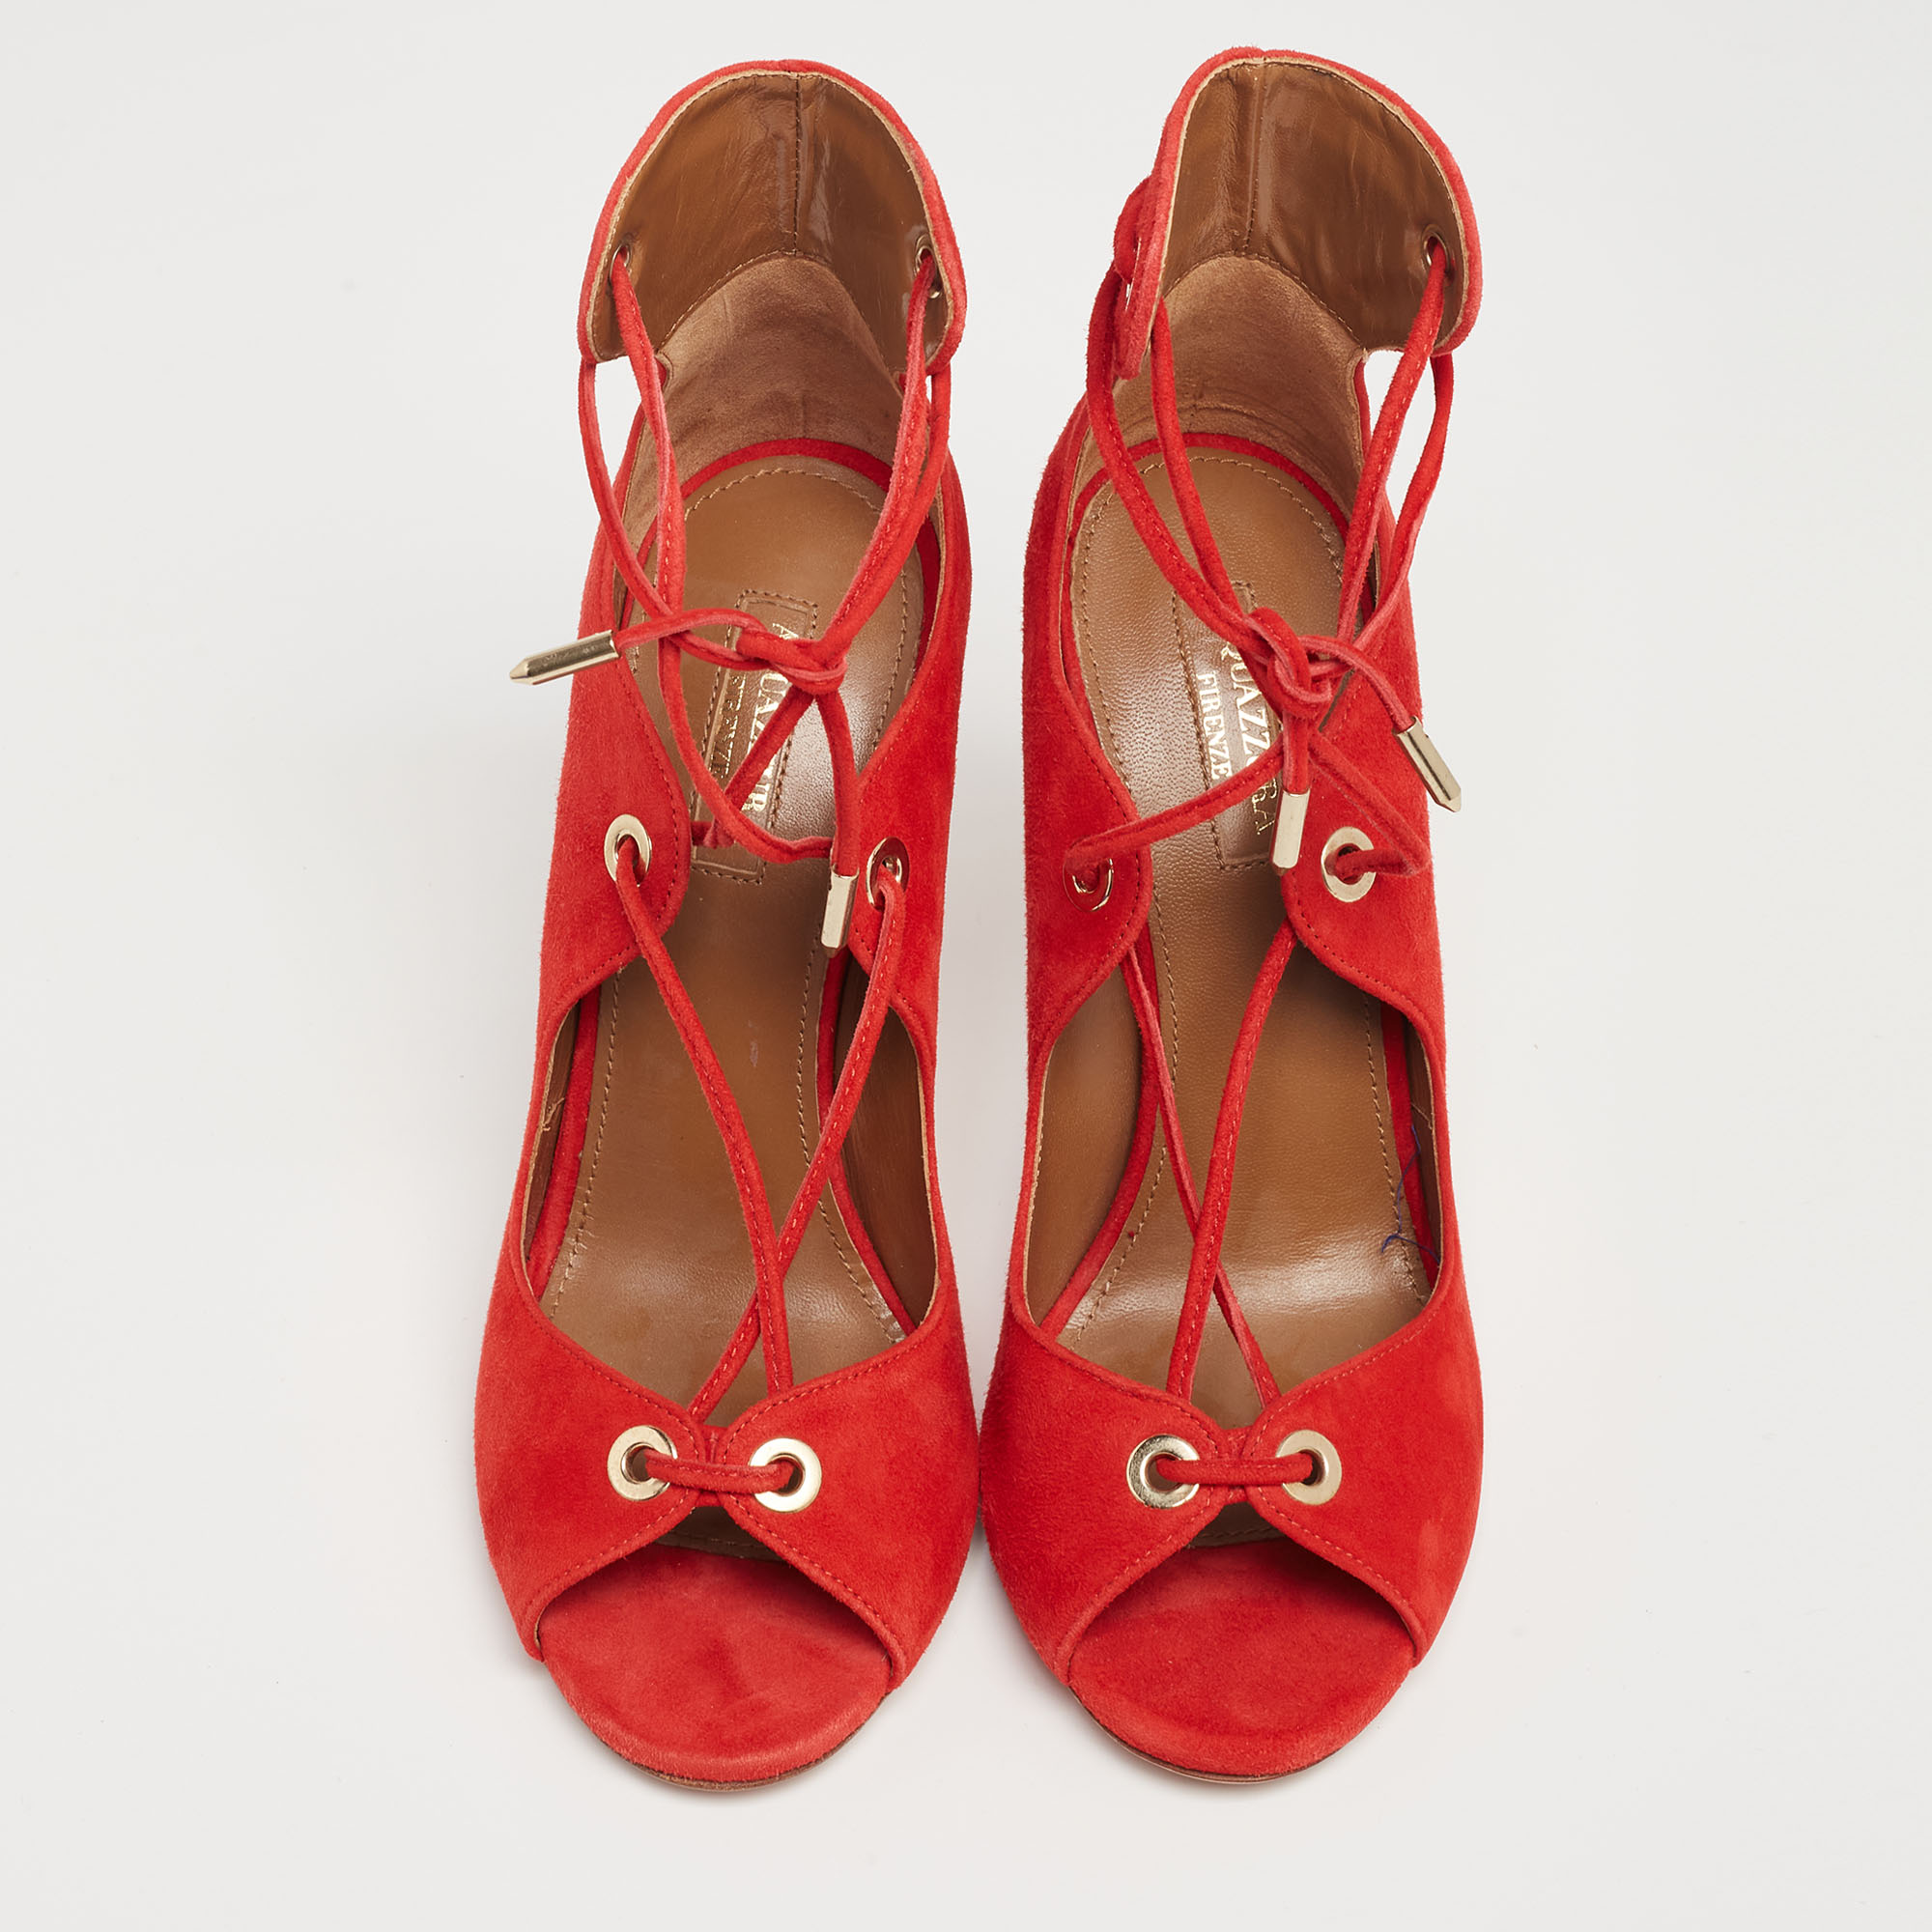 Aquazzura Red Suede Tango Curvy Lace-Up Sandals Size 37